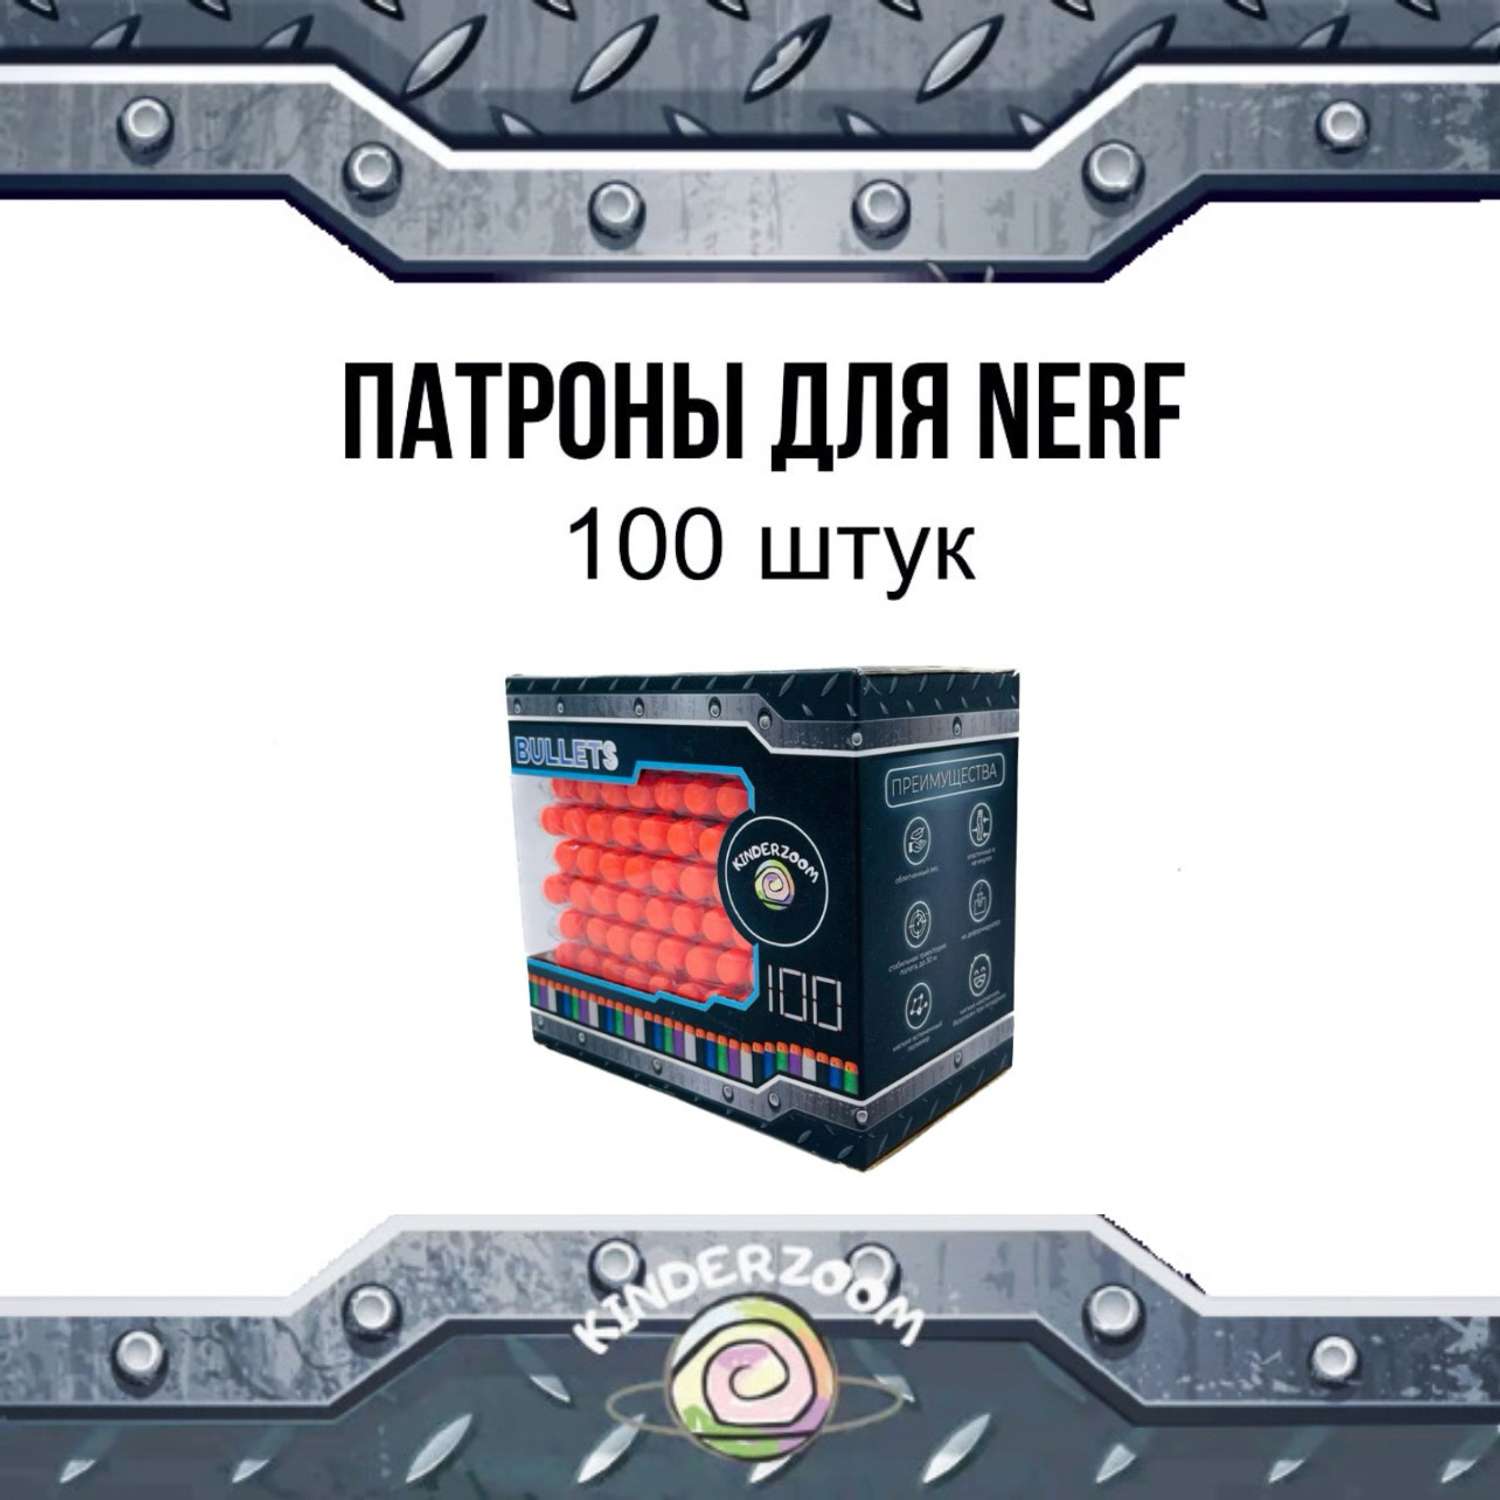 Патроны для бластеров Nerf Kinderzoom black100gift 100 шт. - фото 1